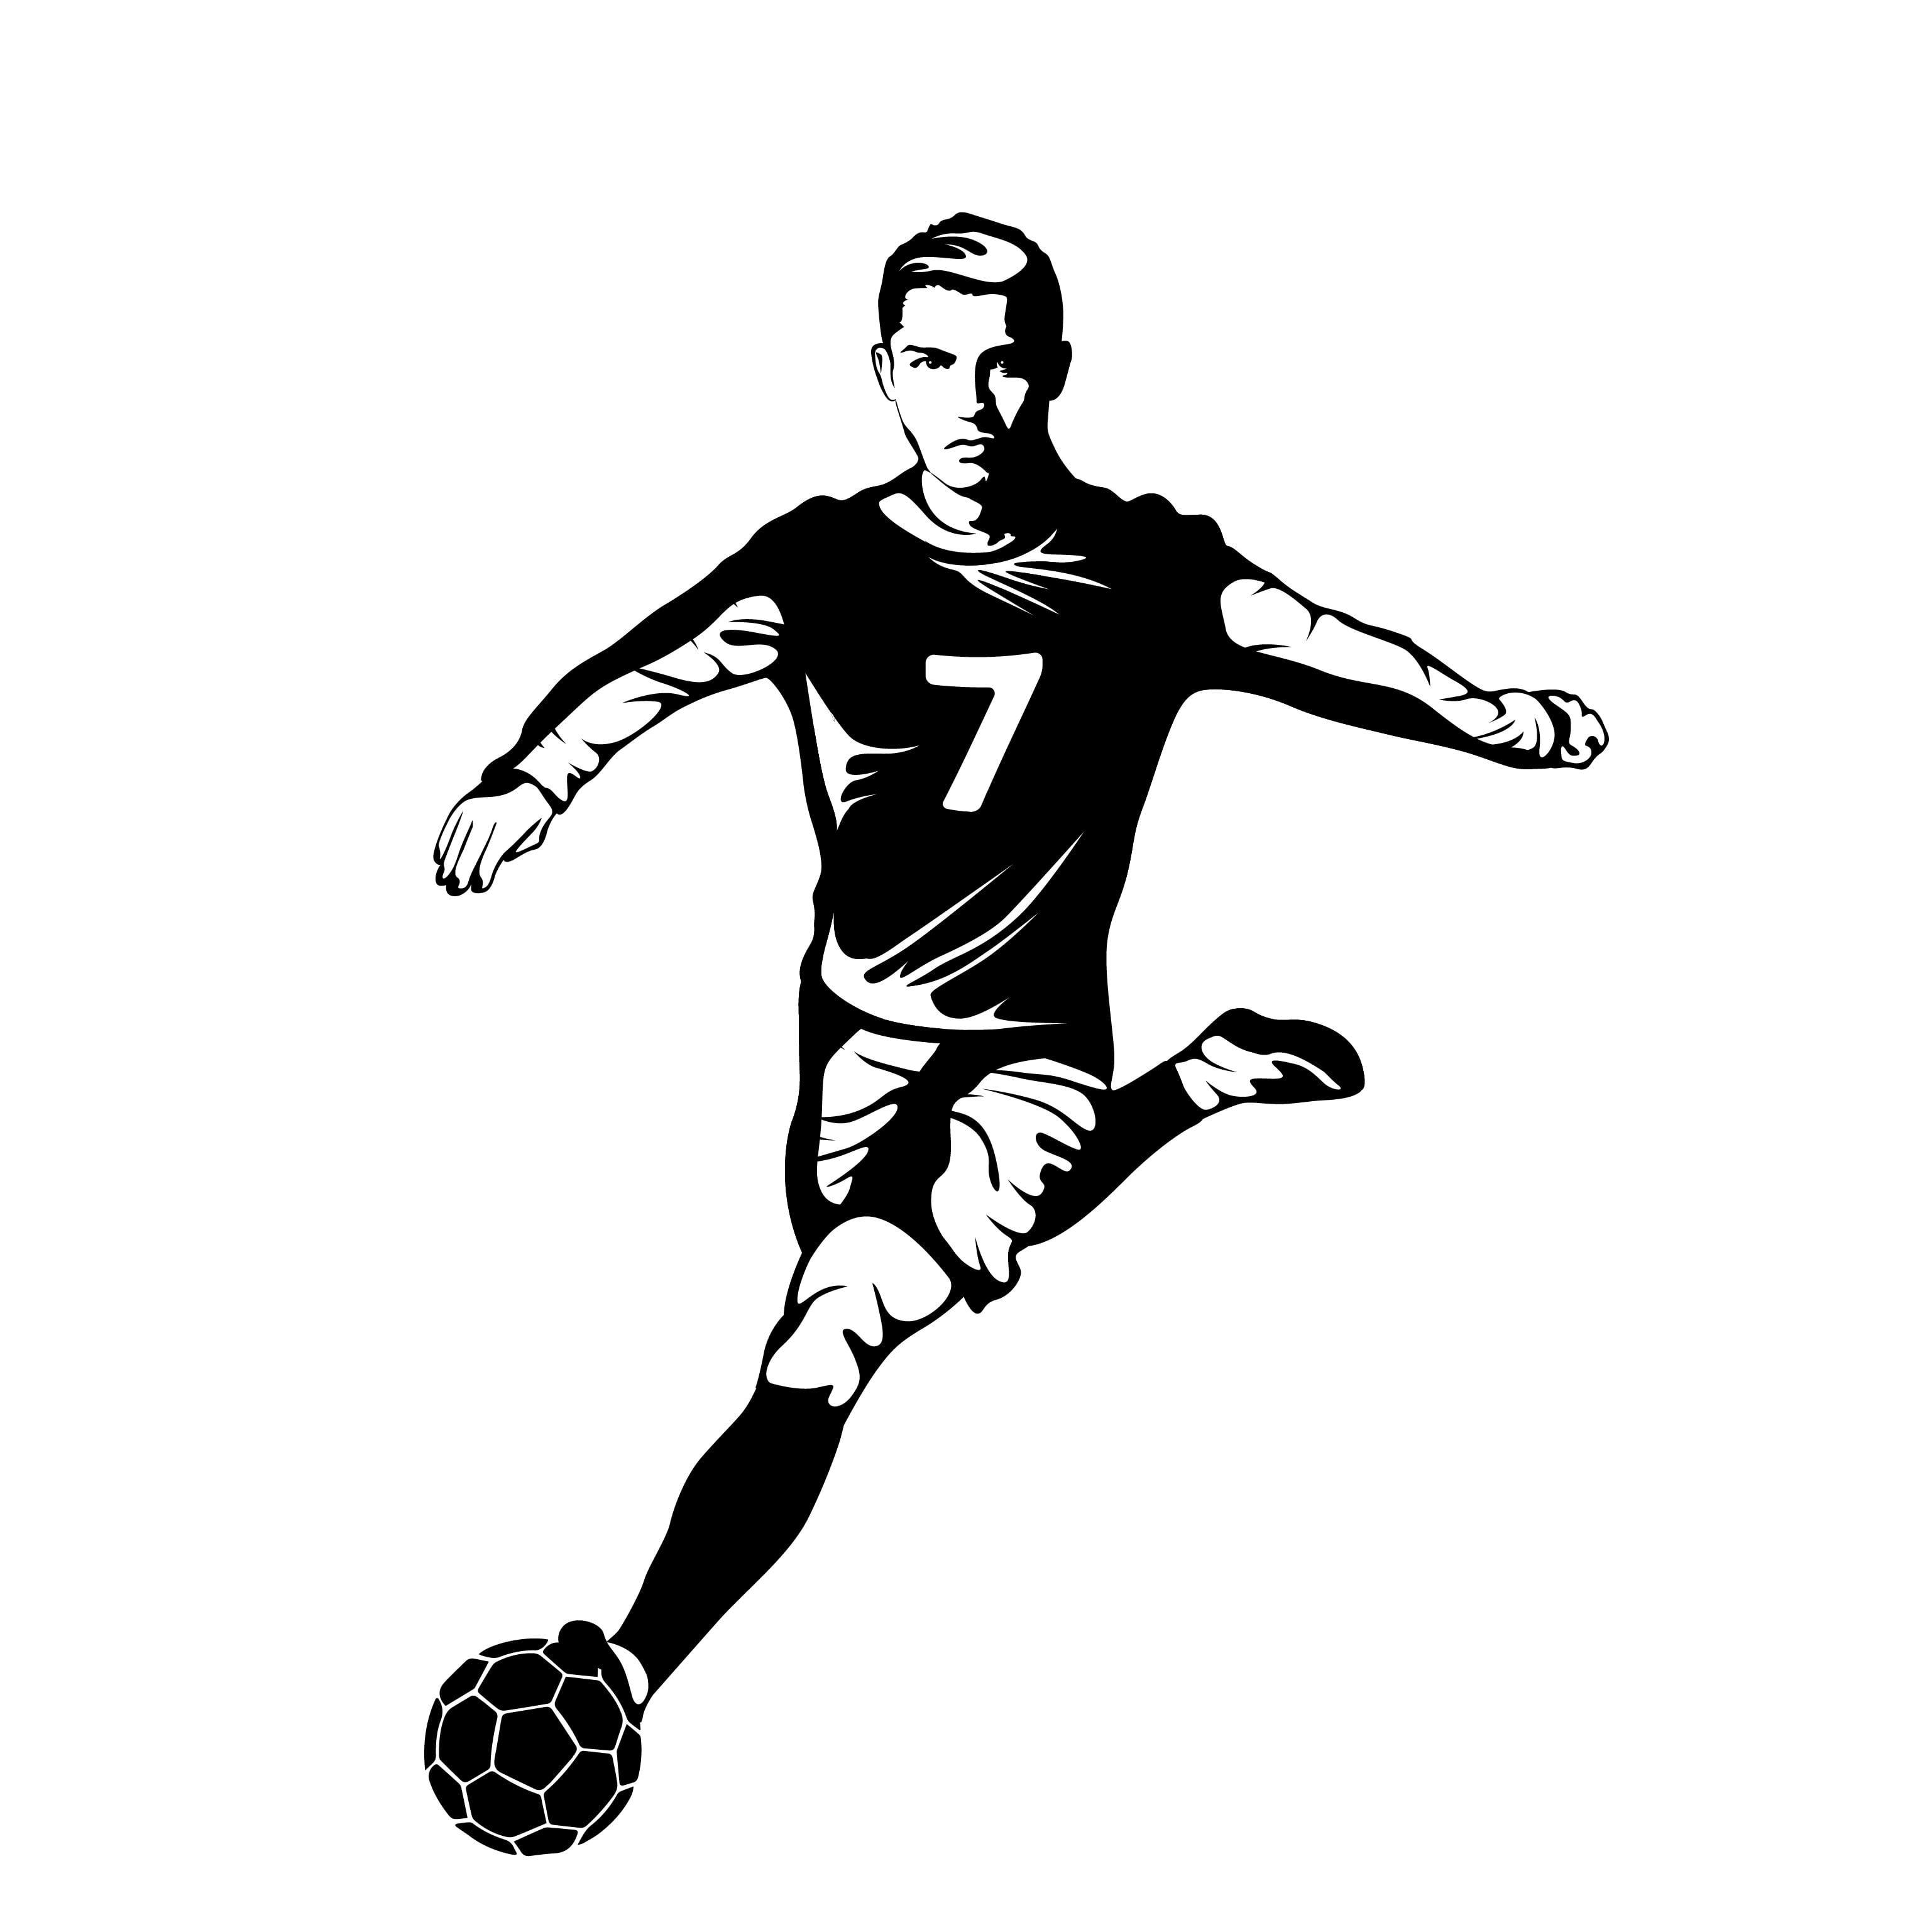 mur autocollant vinyle art stickers Soccer-football-player-silhouette set